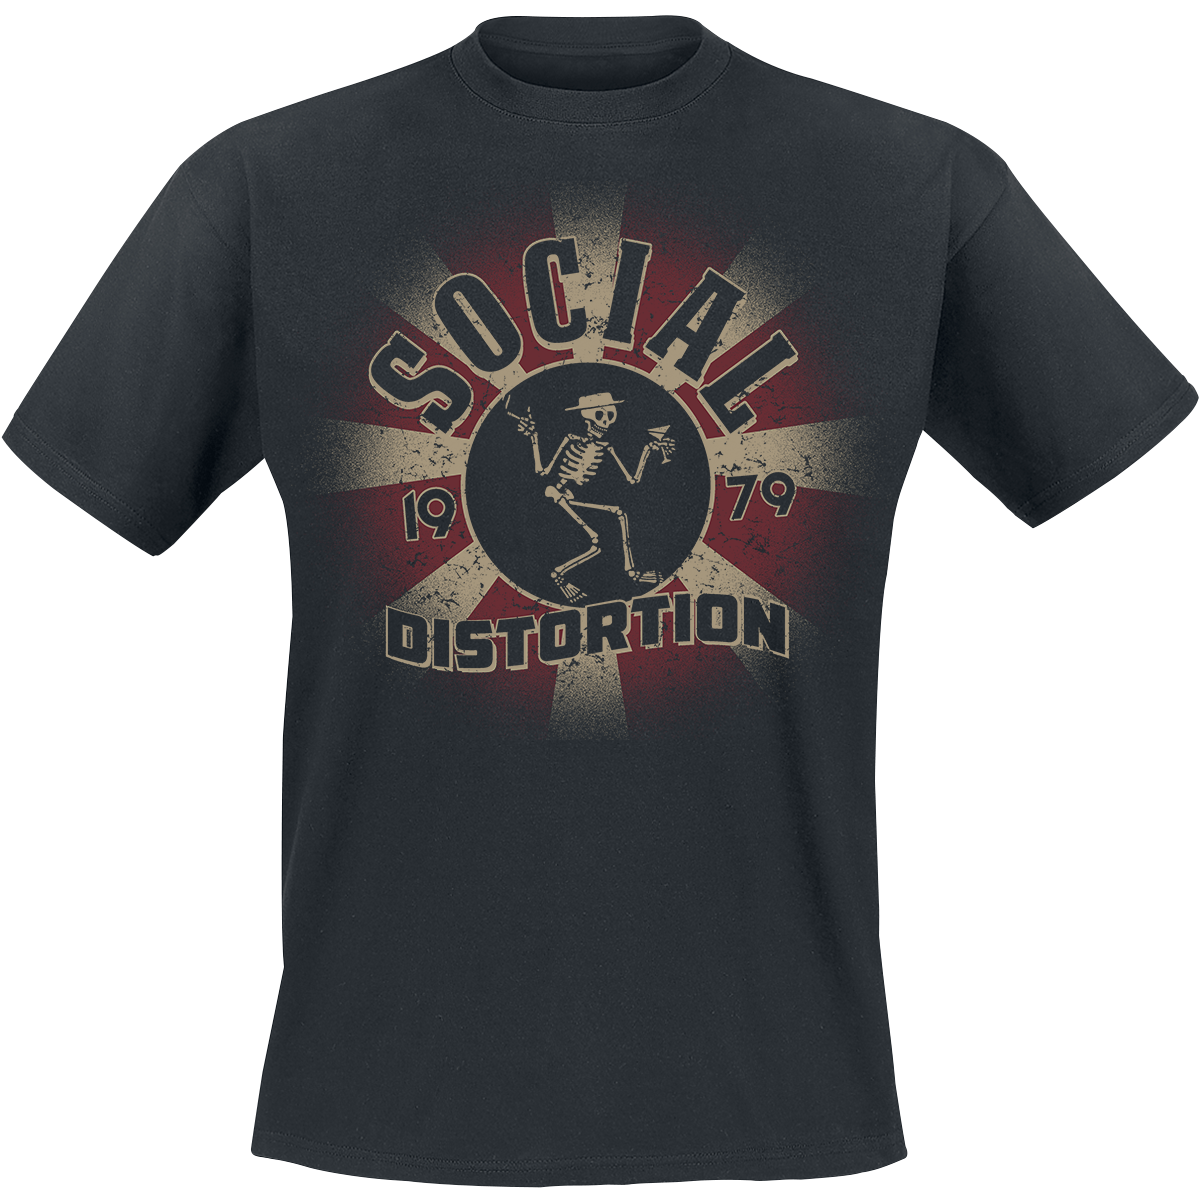 Social Distortion - Eclipse - T-Shirt - schwarz